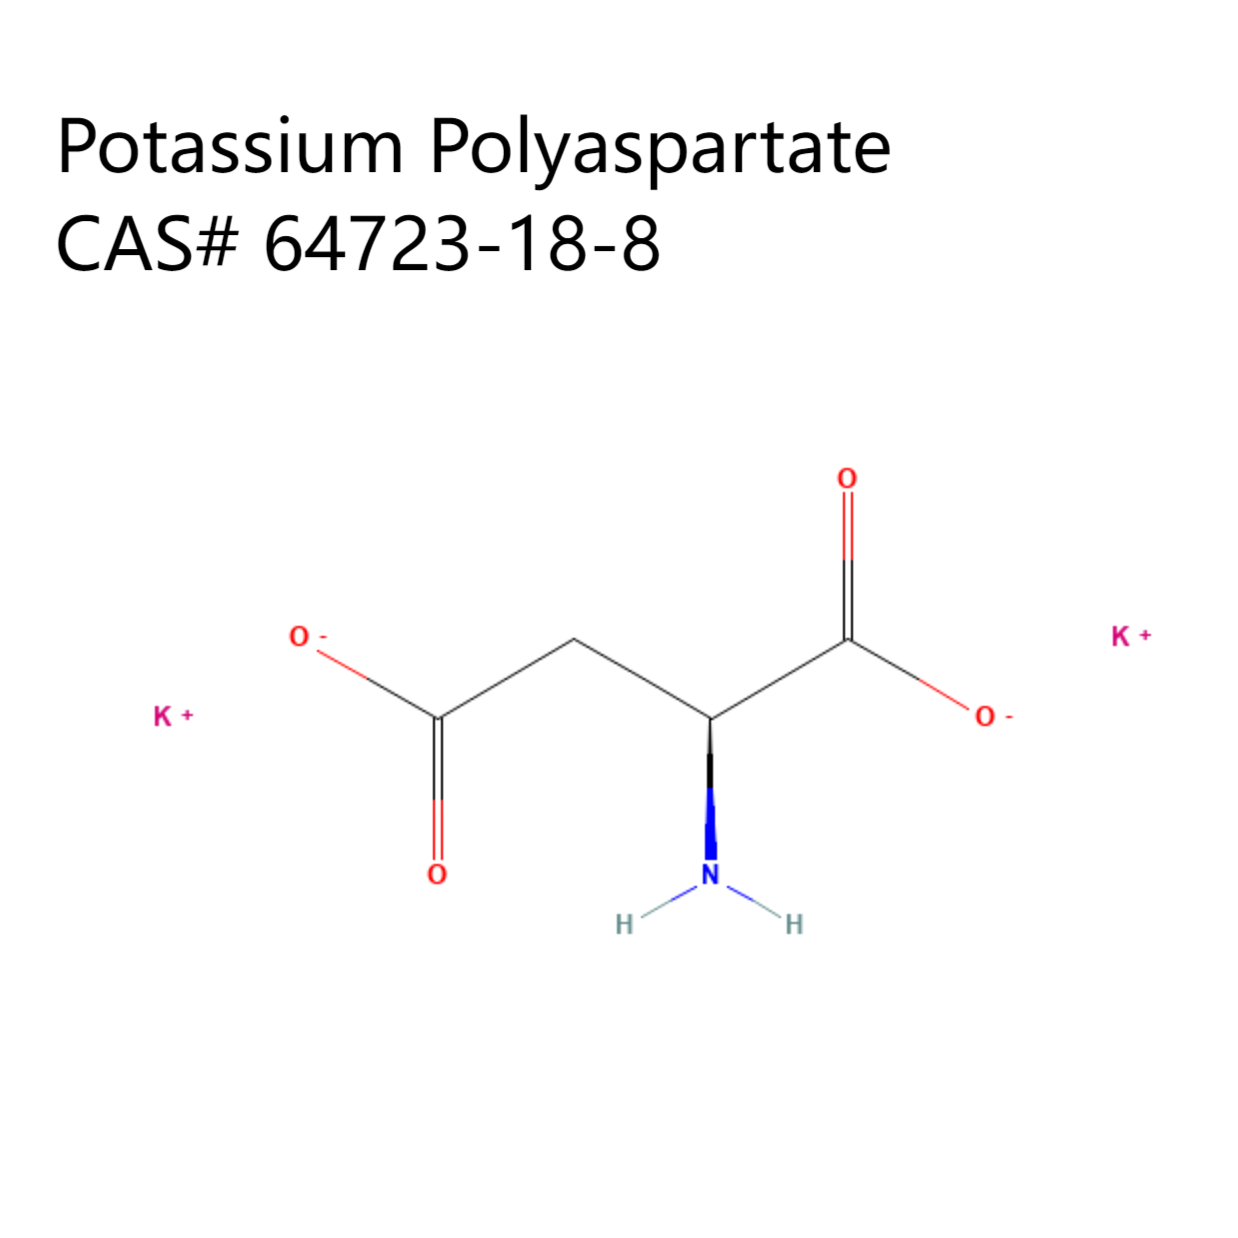 Potassium polyaspartate